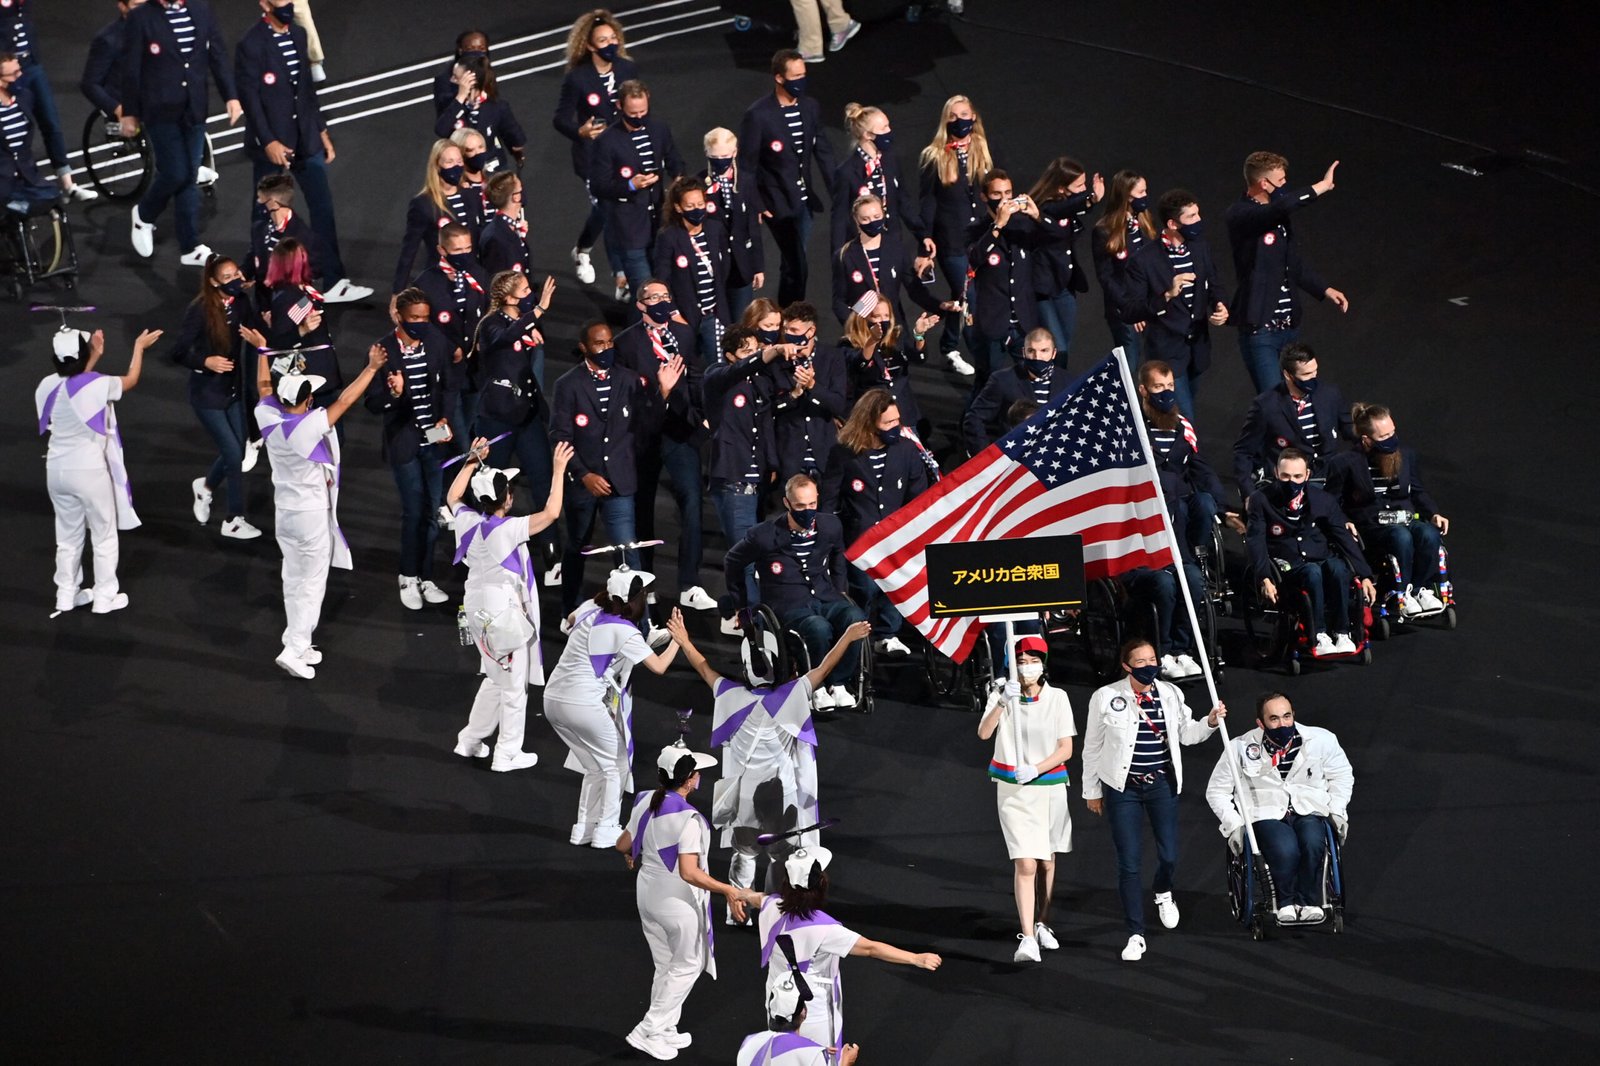 Team USA sending more women than men for Paris Olympics 2024